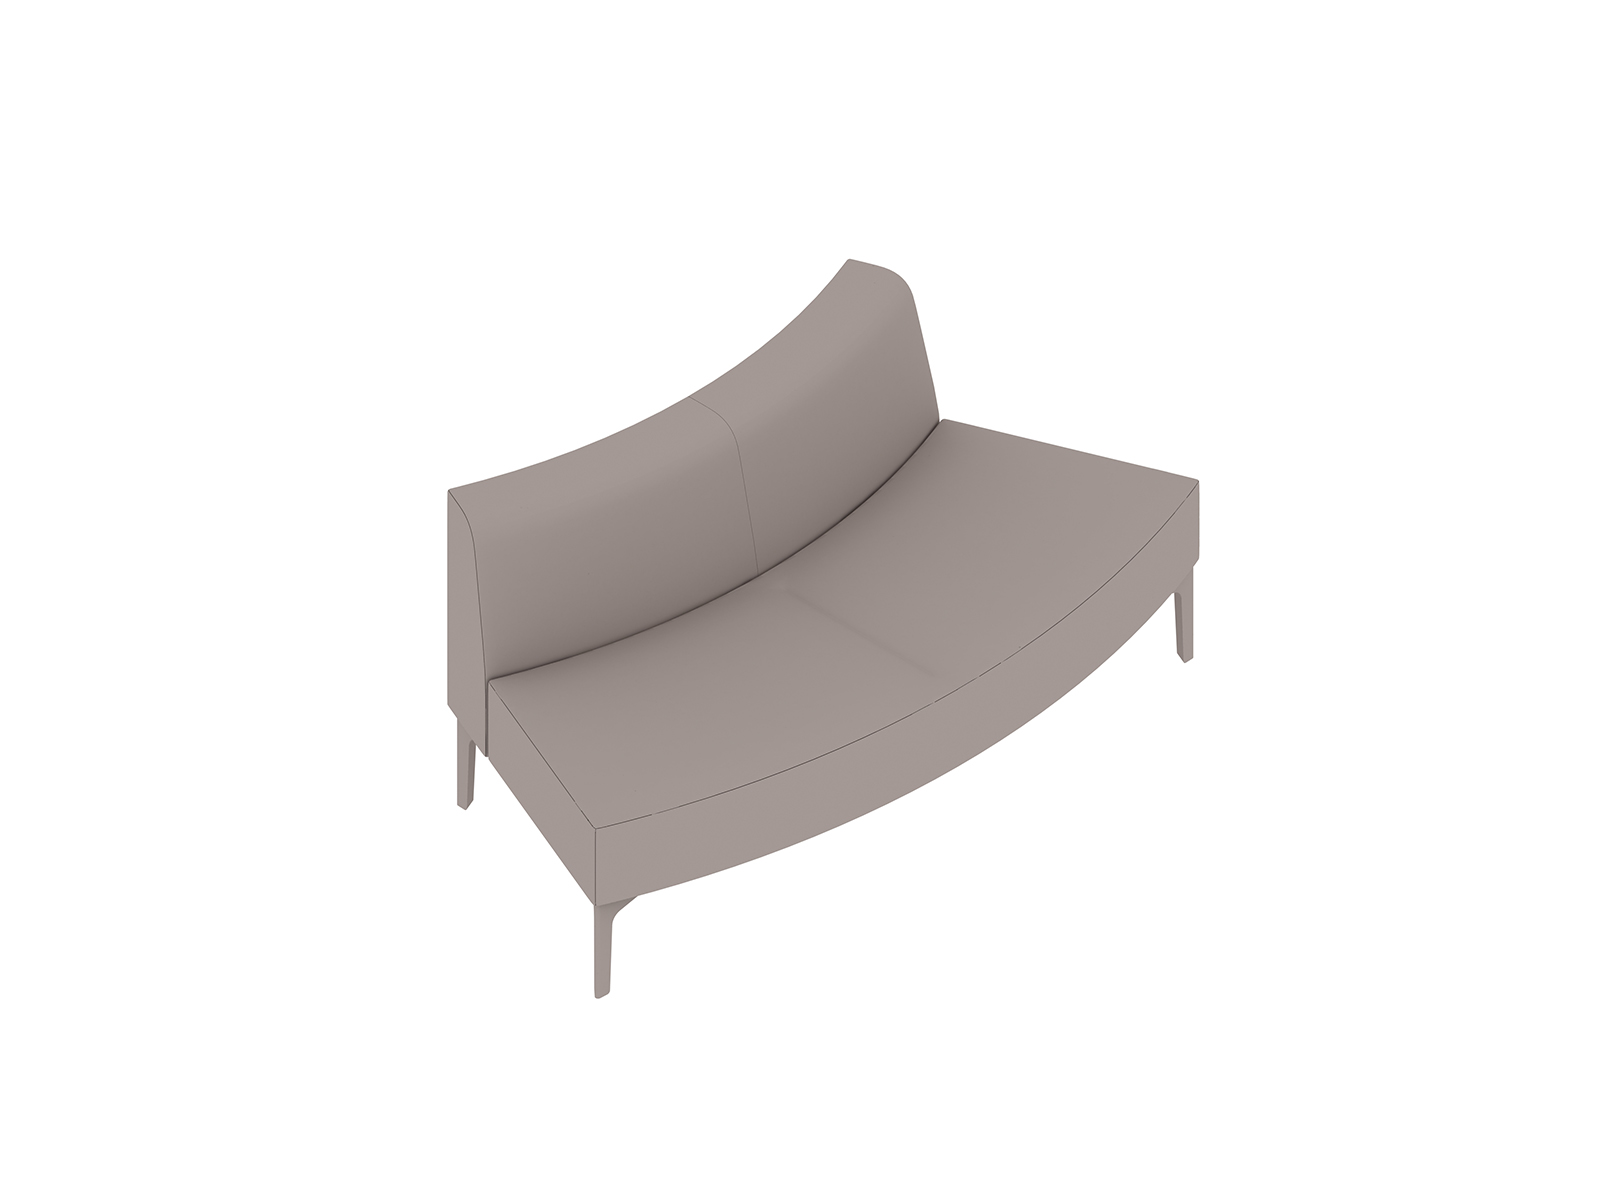 Un rendering generico - Seduta modulare Symbol–Curva esterna a 45°